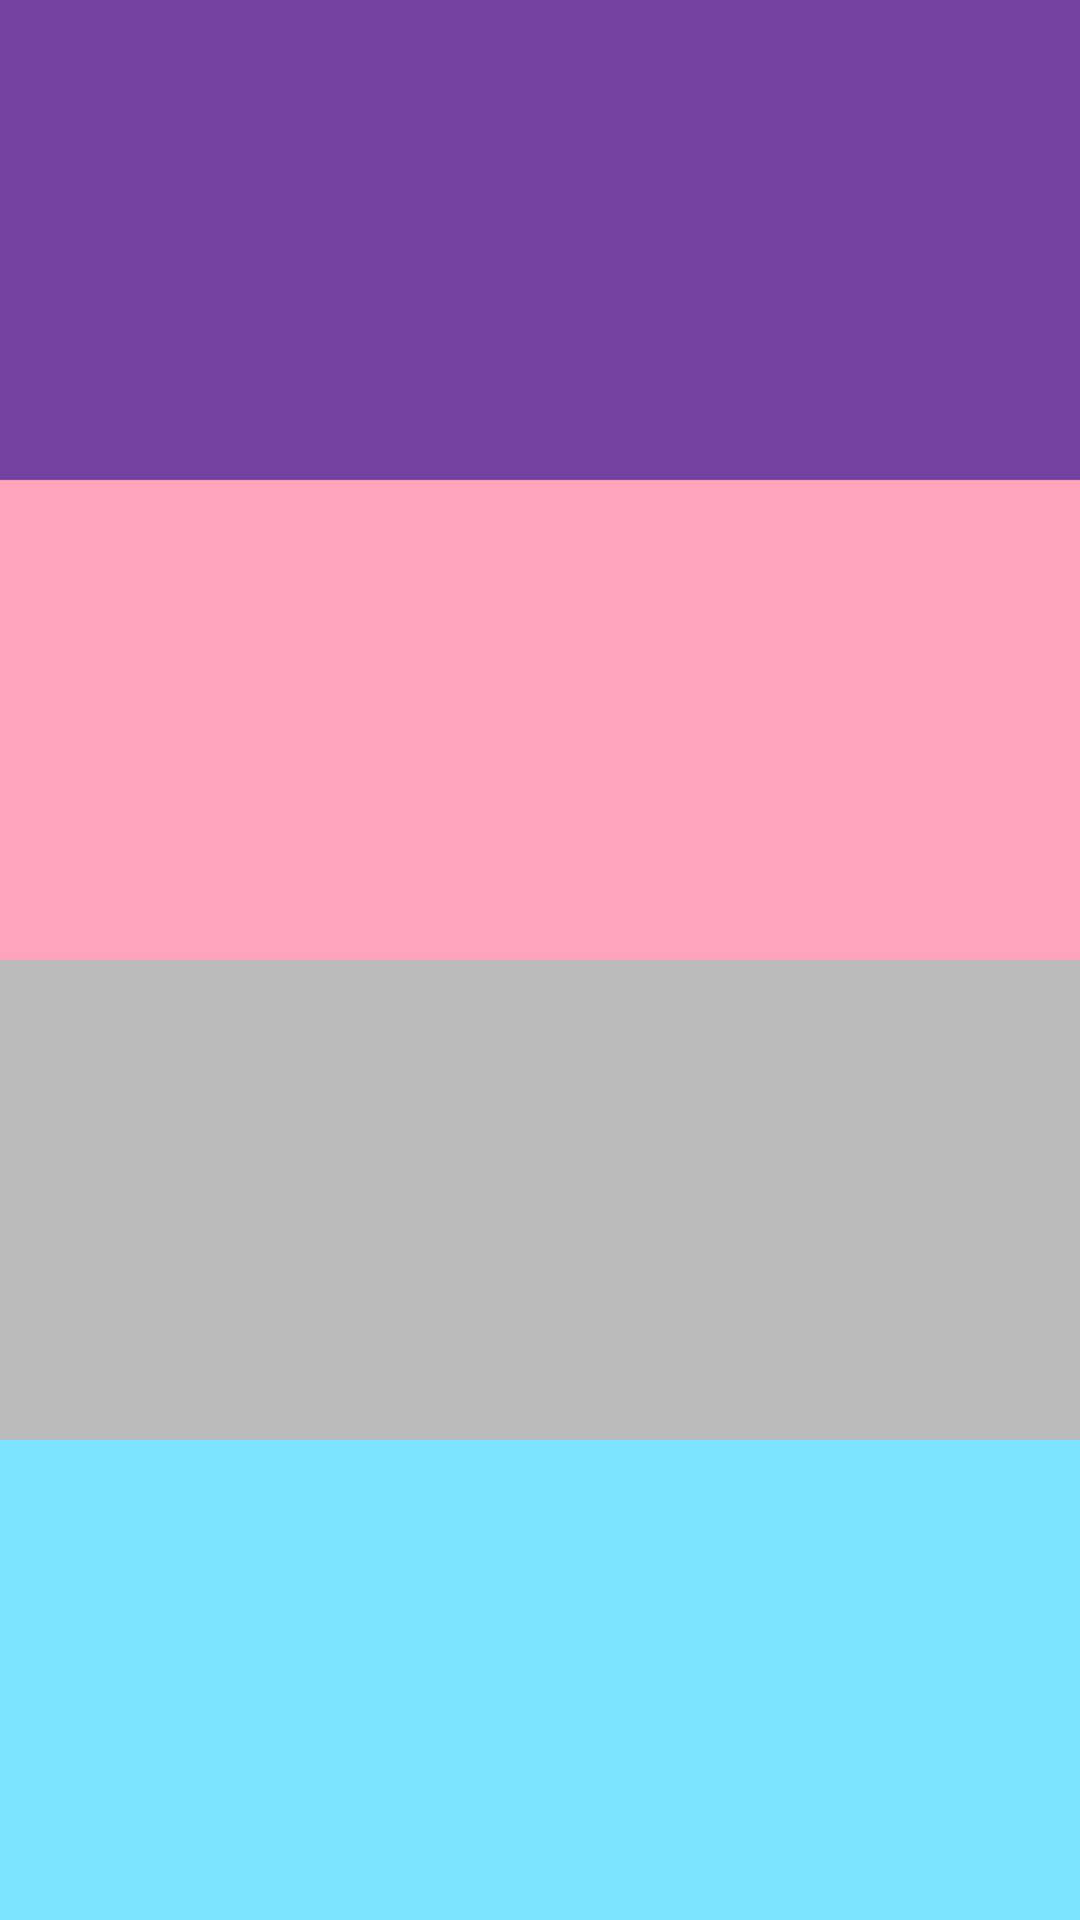 trans pride wallpaper